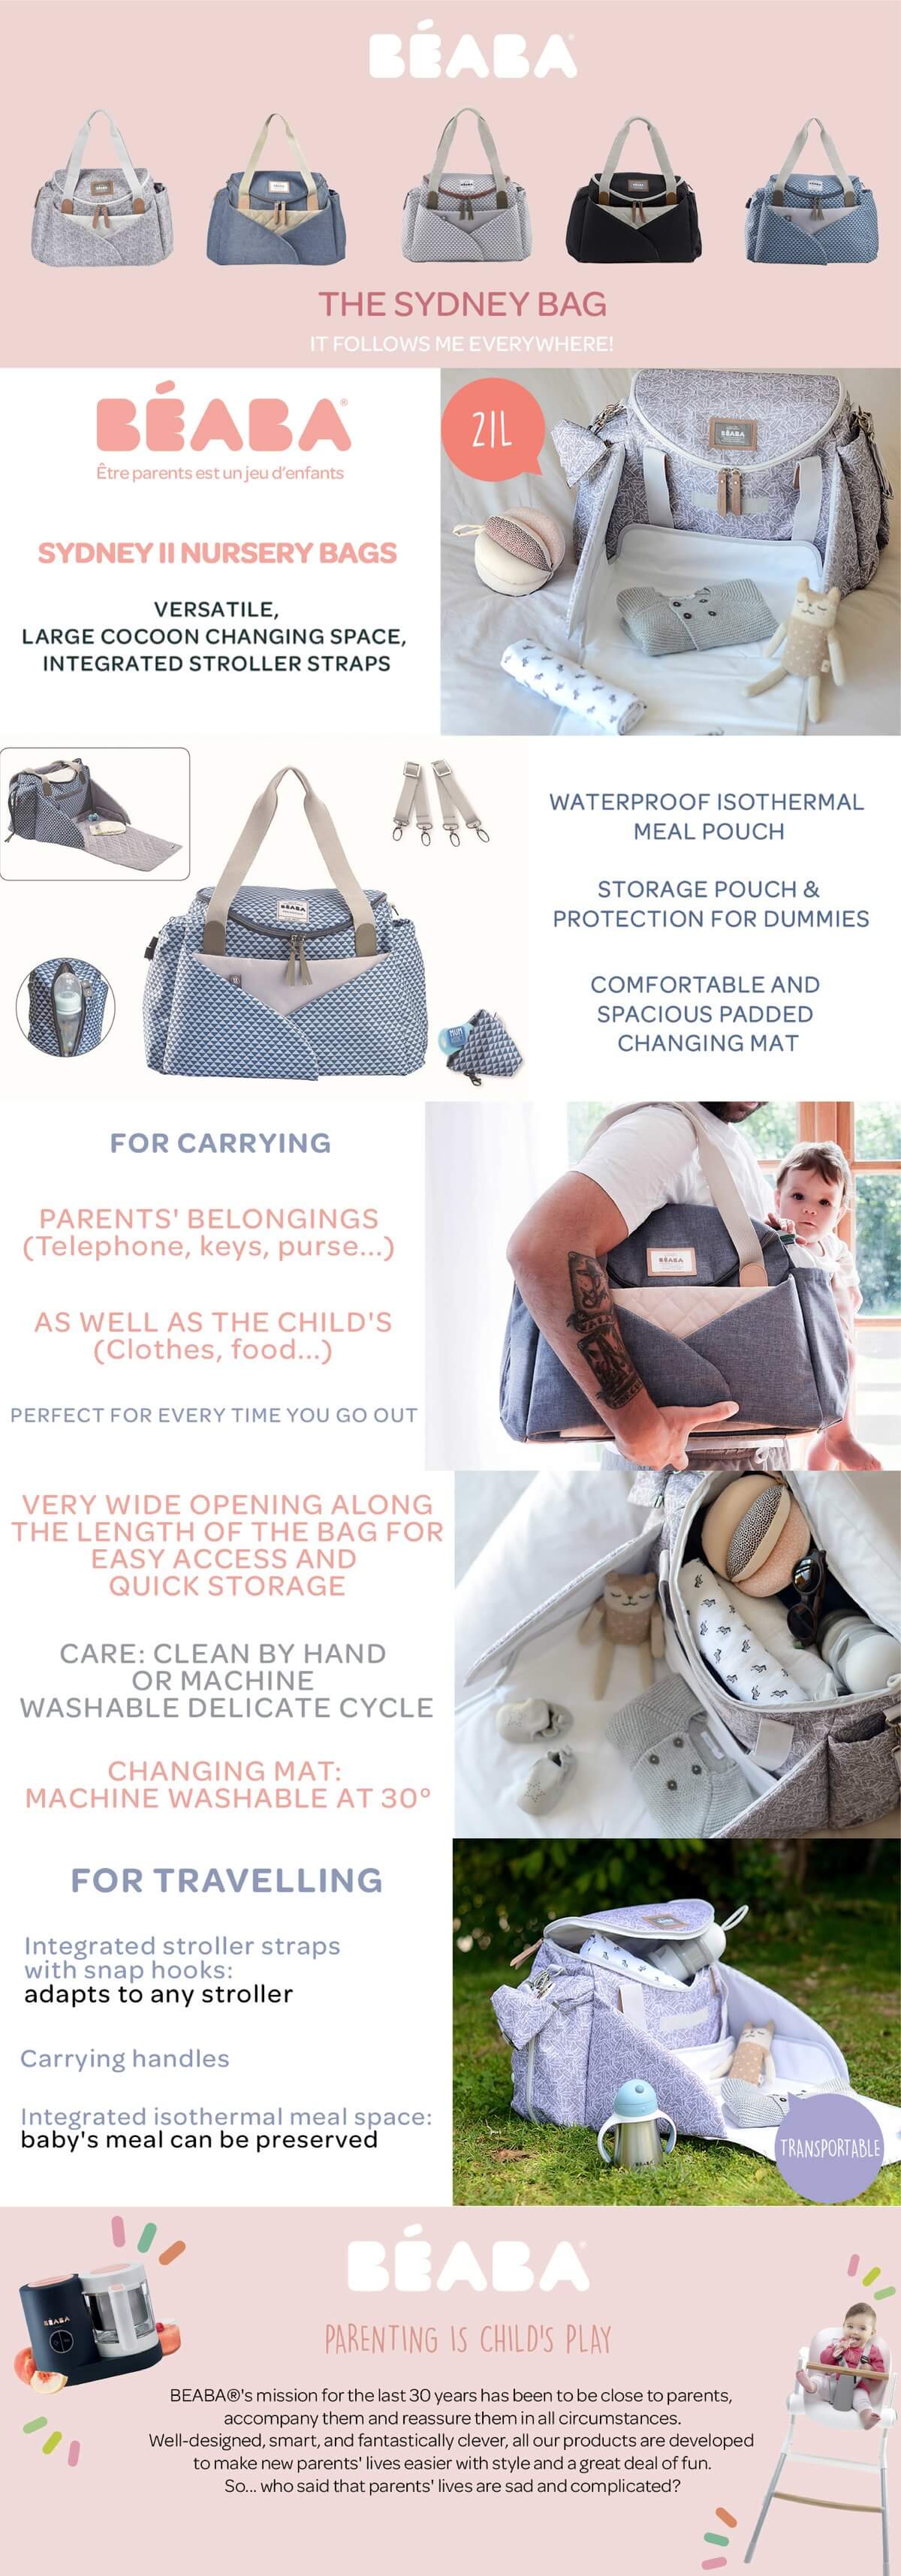 Beaba Sydney II Changing Bag - Play Print, Blue